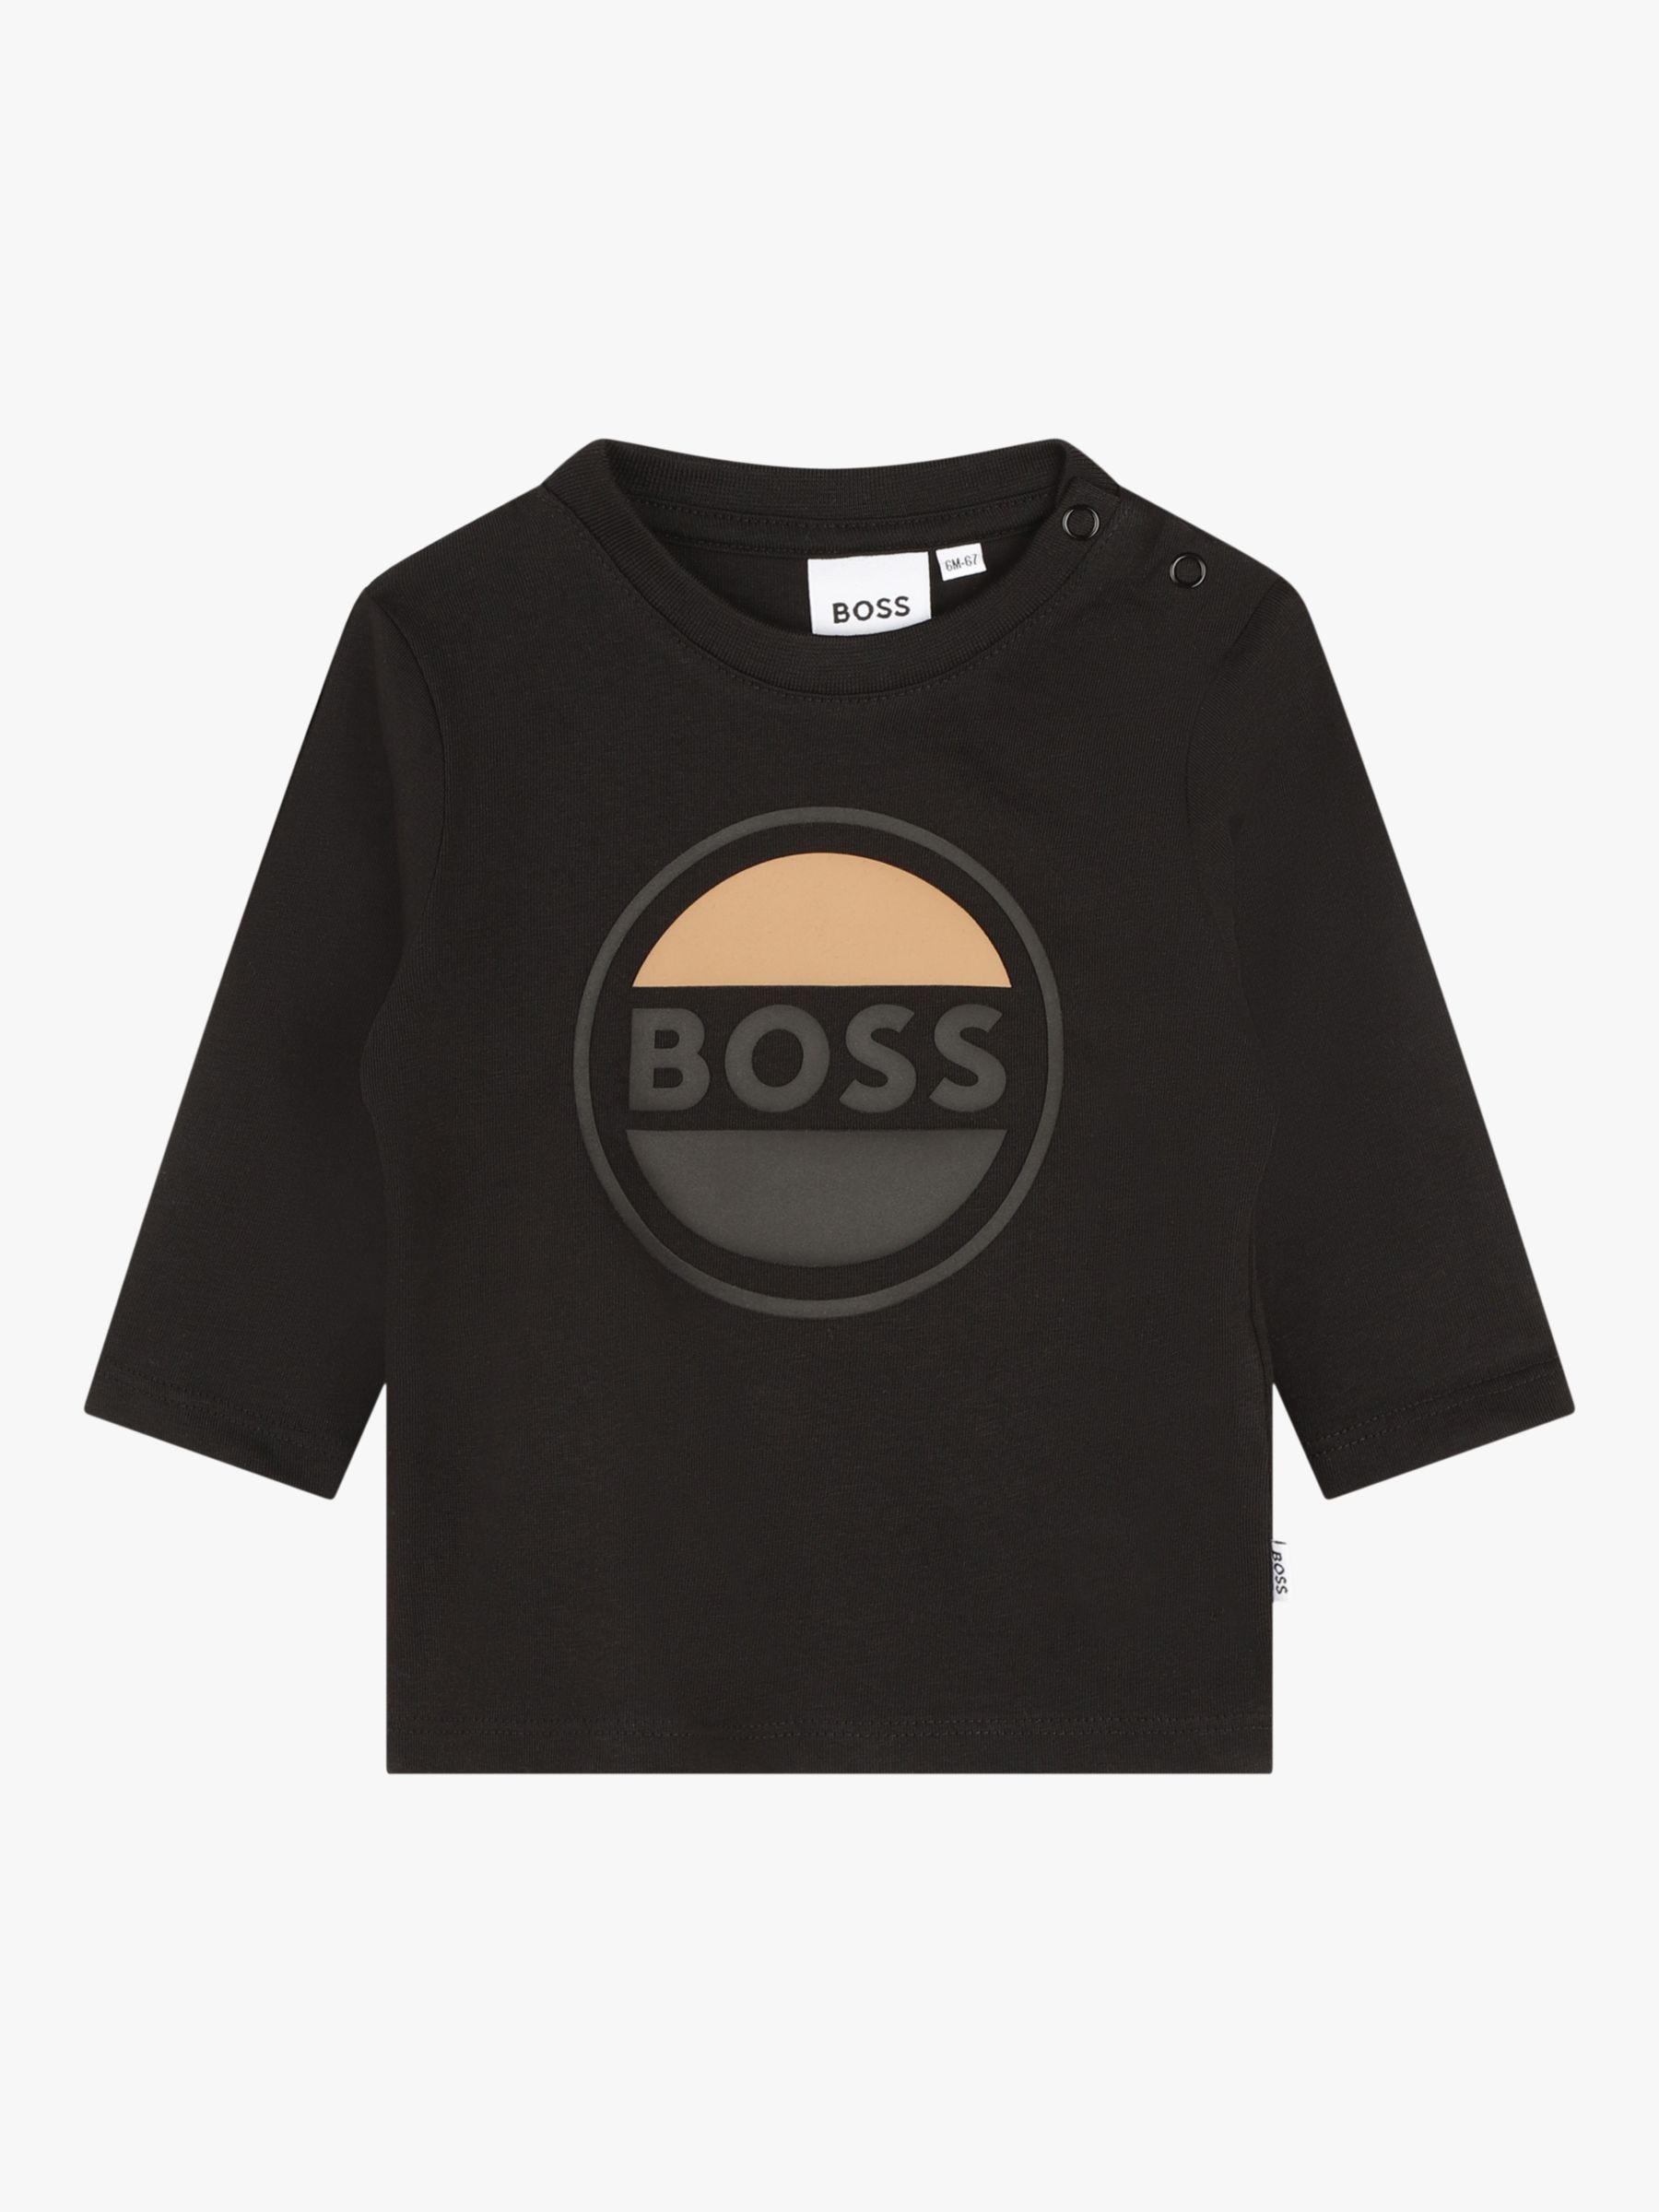 BOSS Baby Logo Long Sleeve T-Shirt, Black/Multi at John Lewis & Partners